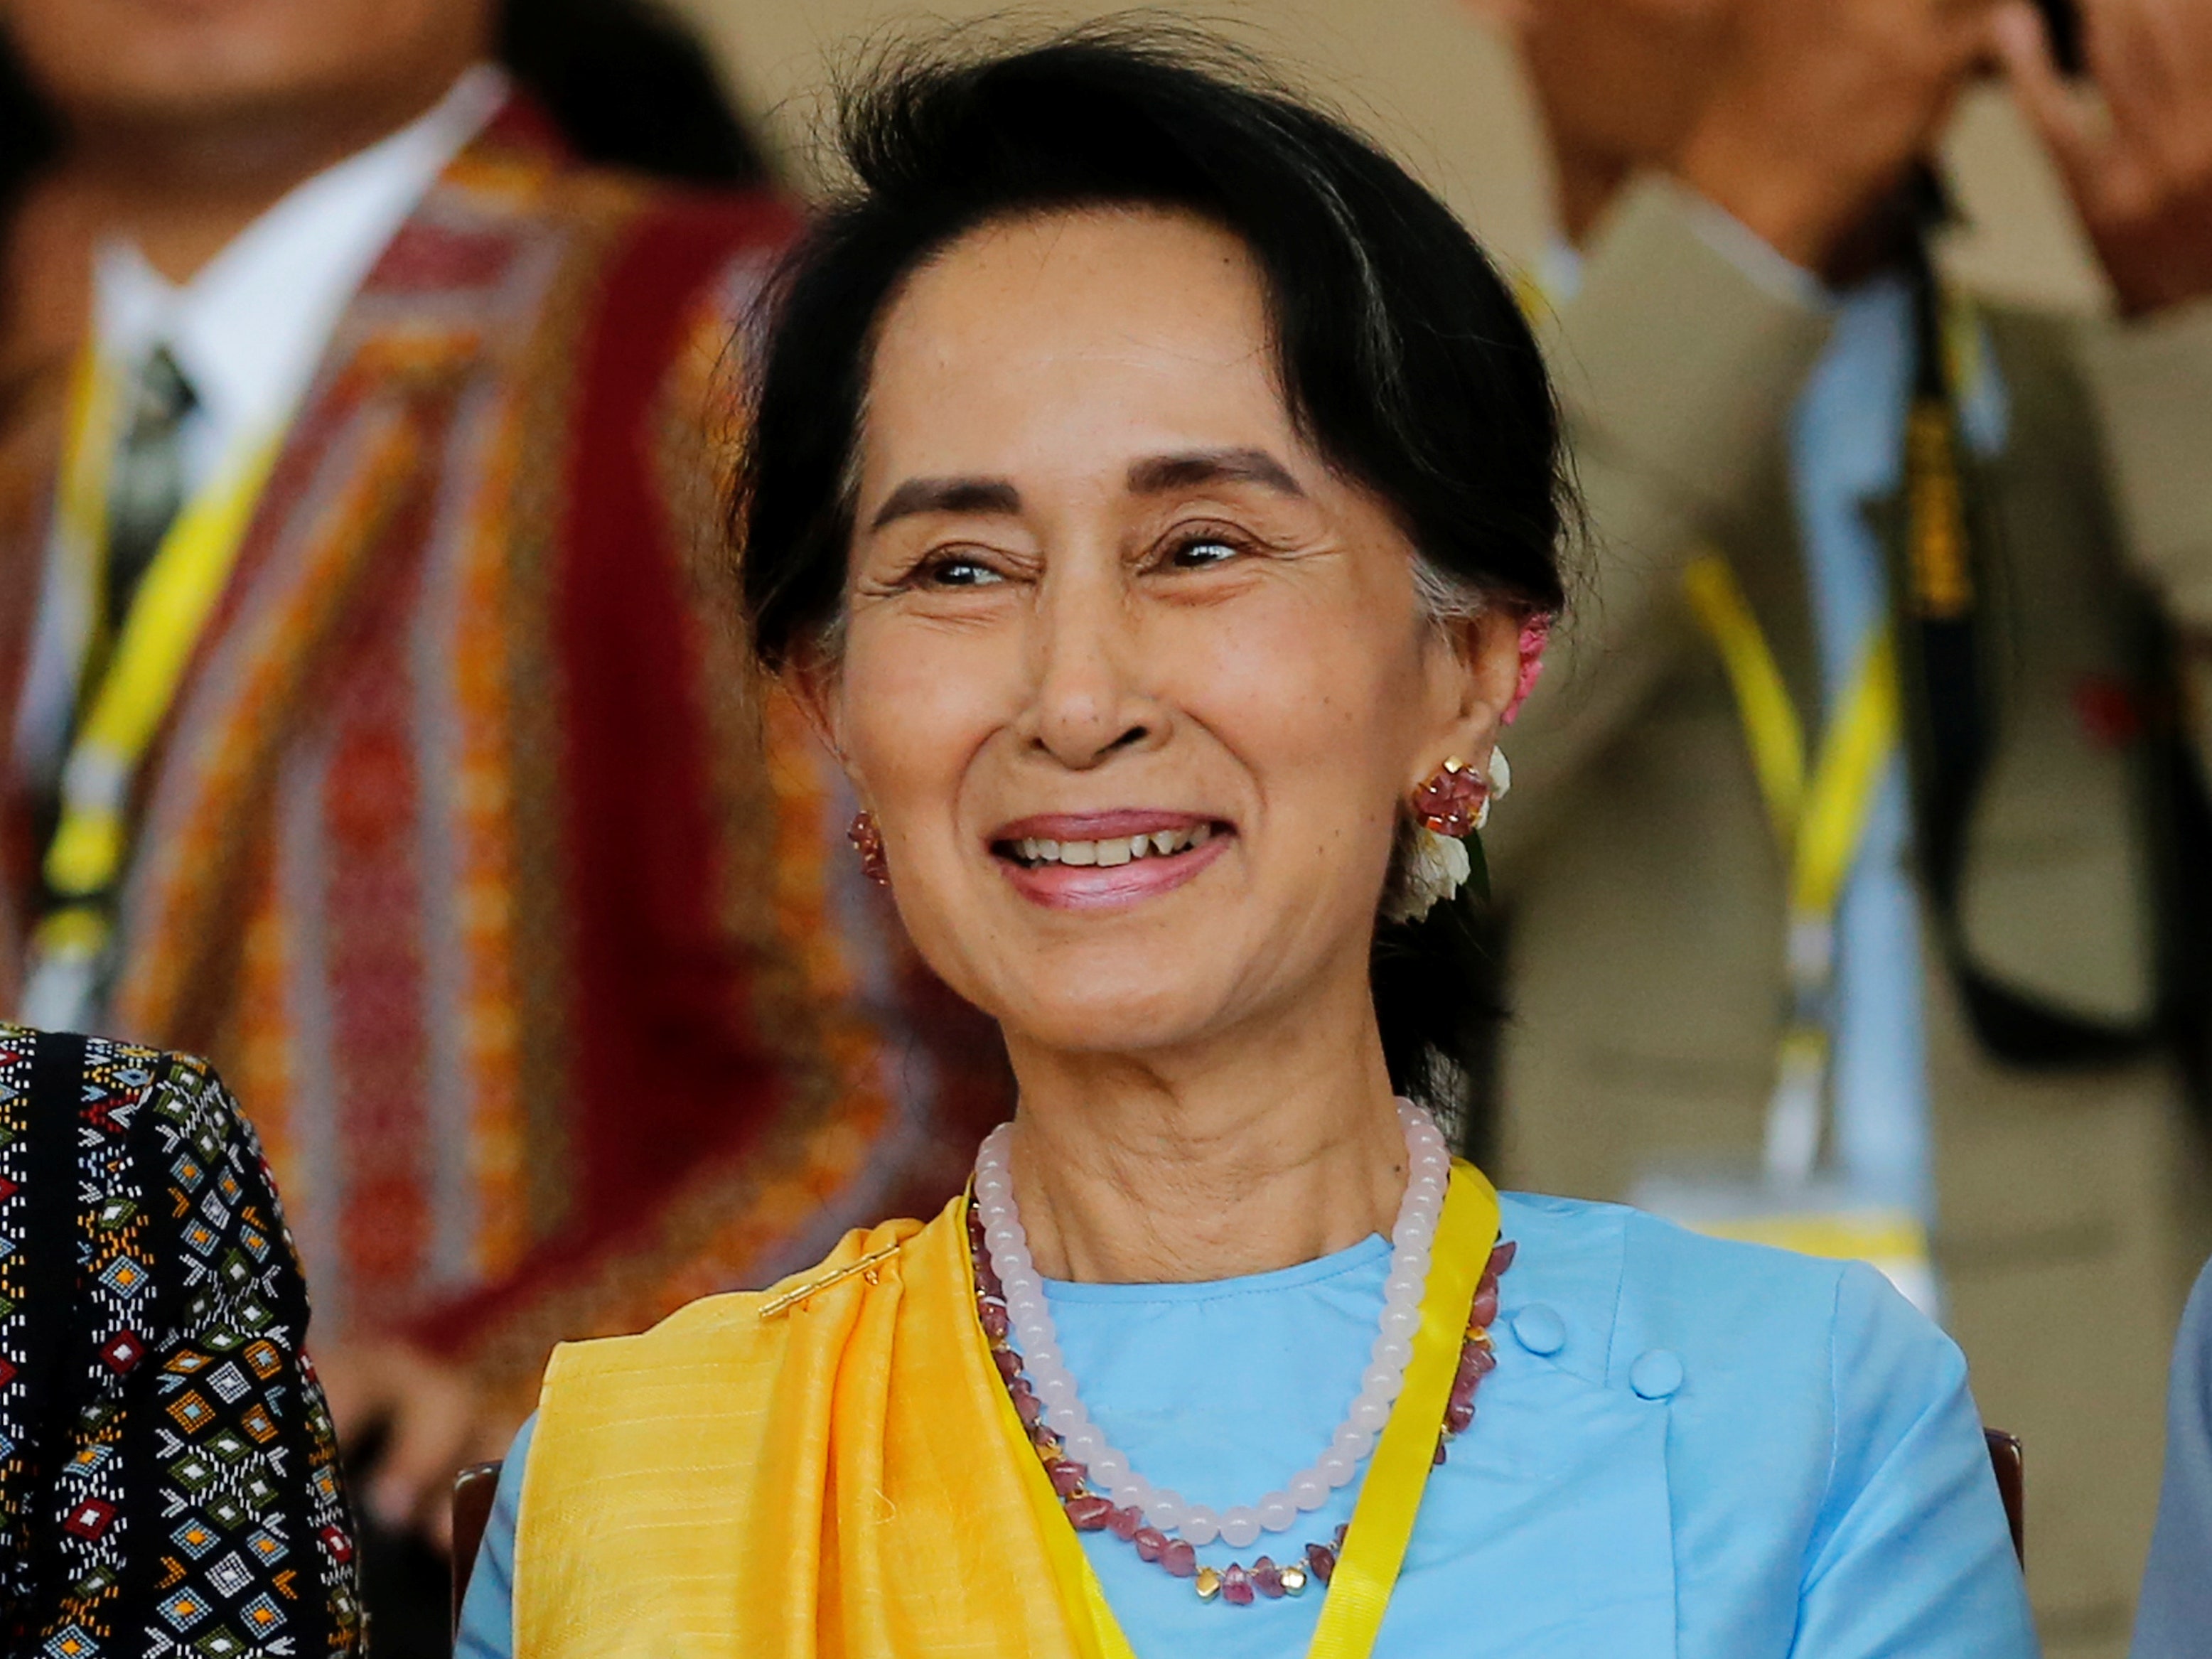 Myanmar Supreme Court to hear appeal of Suu Kyi